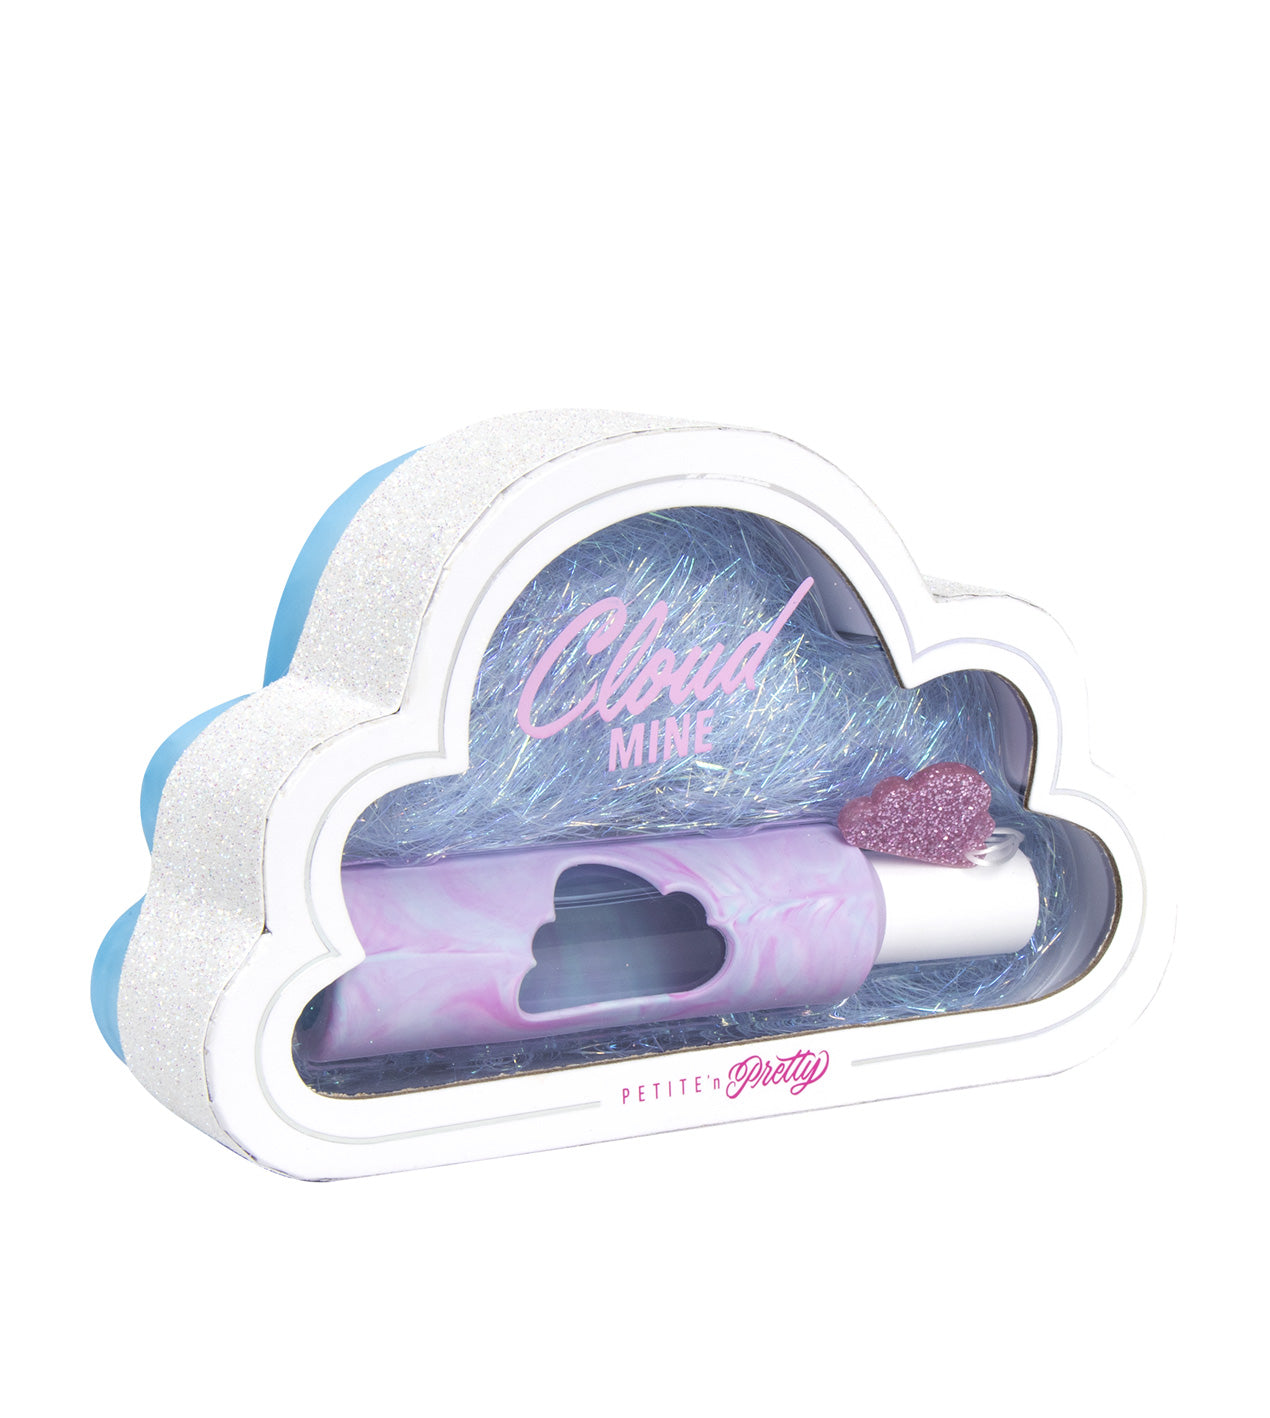 Cloud Mine™ Fragrance Rollerball